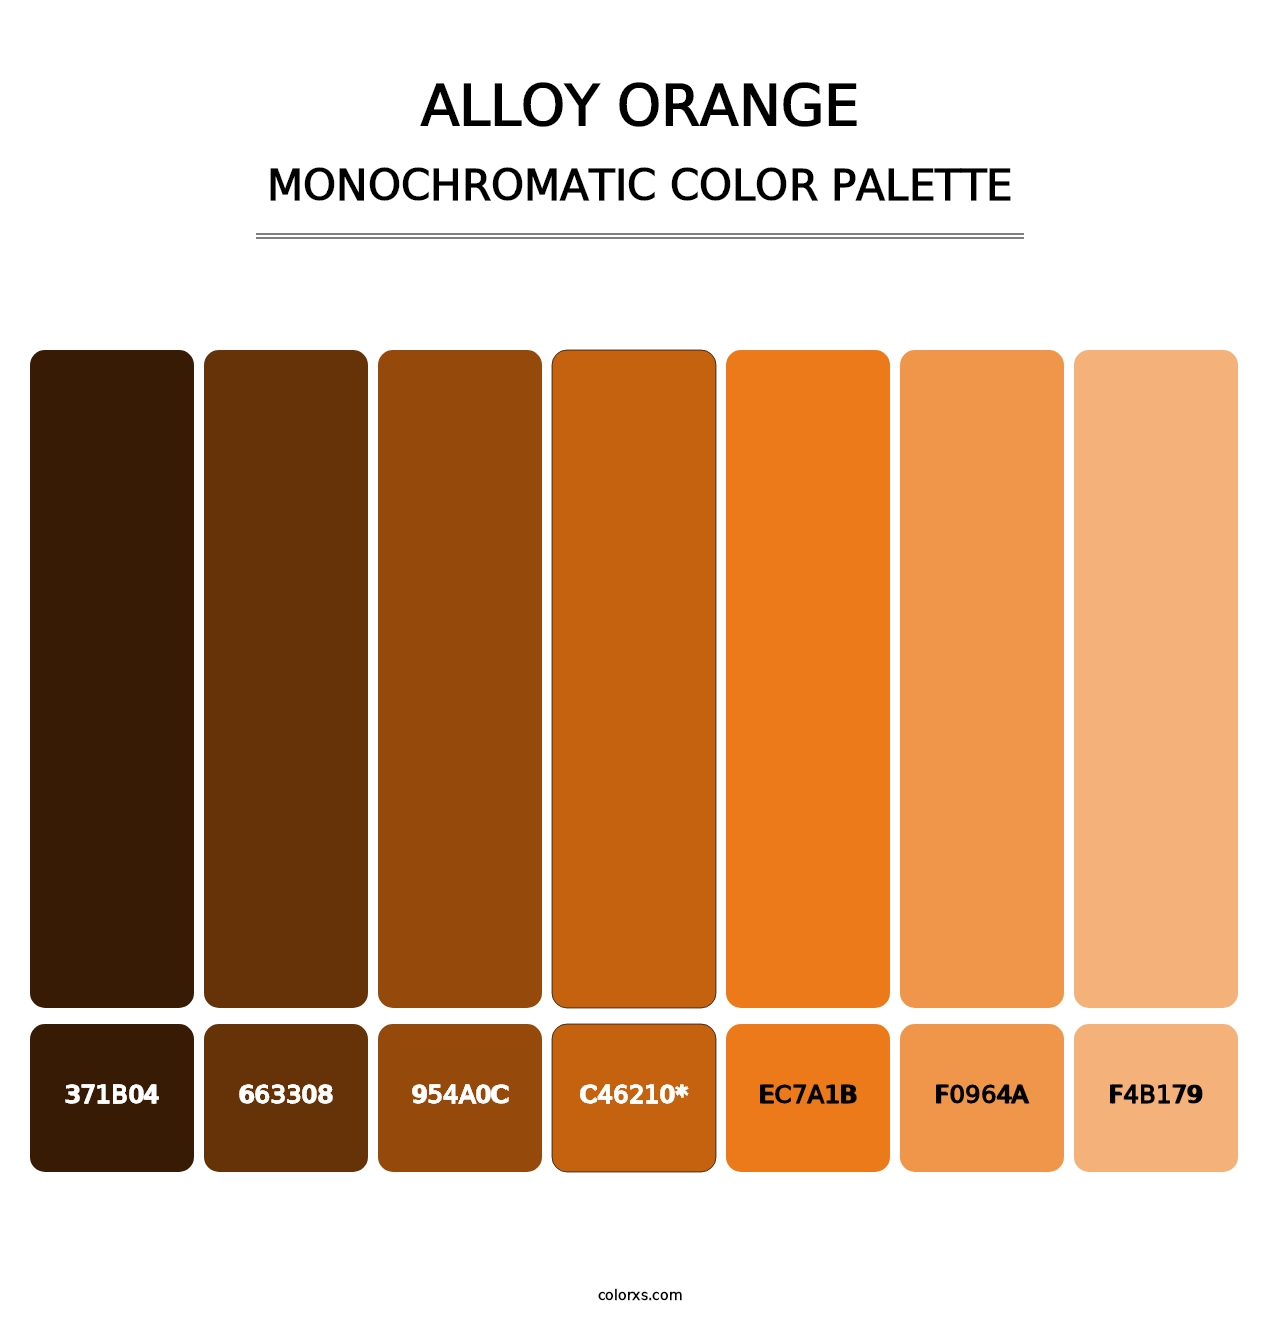 Alloy Orange - Monochromatic Color Palette